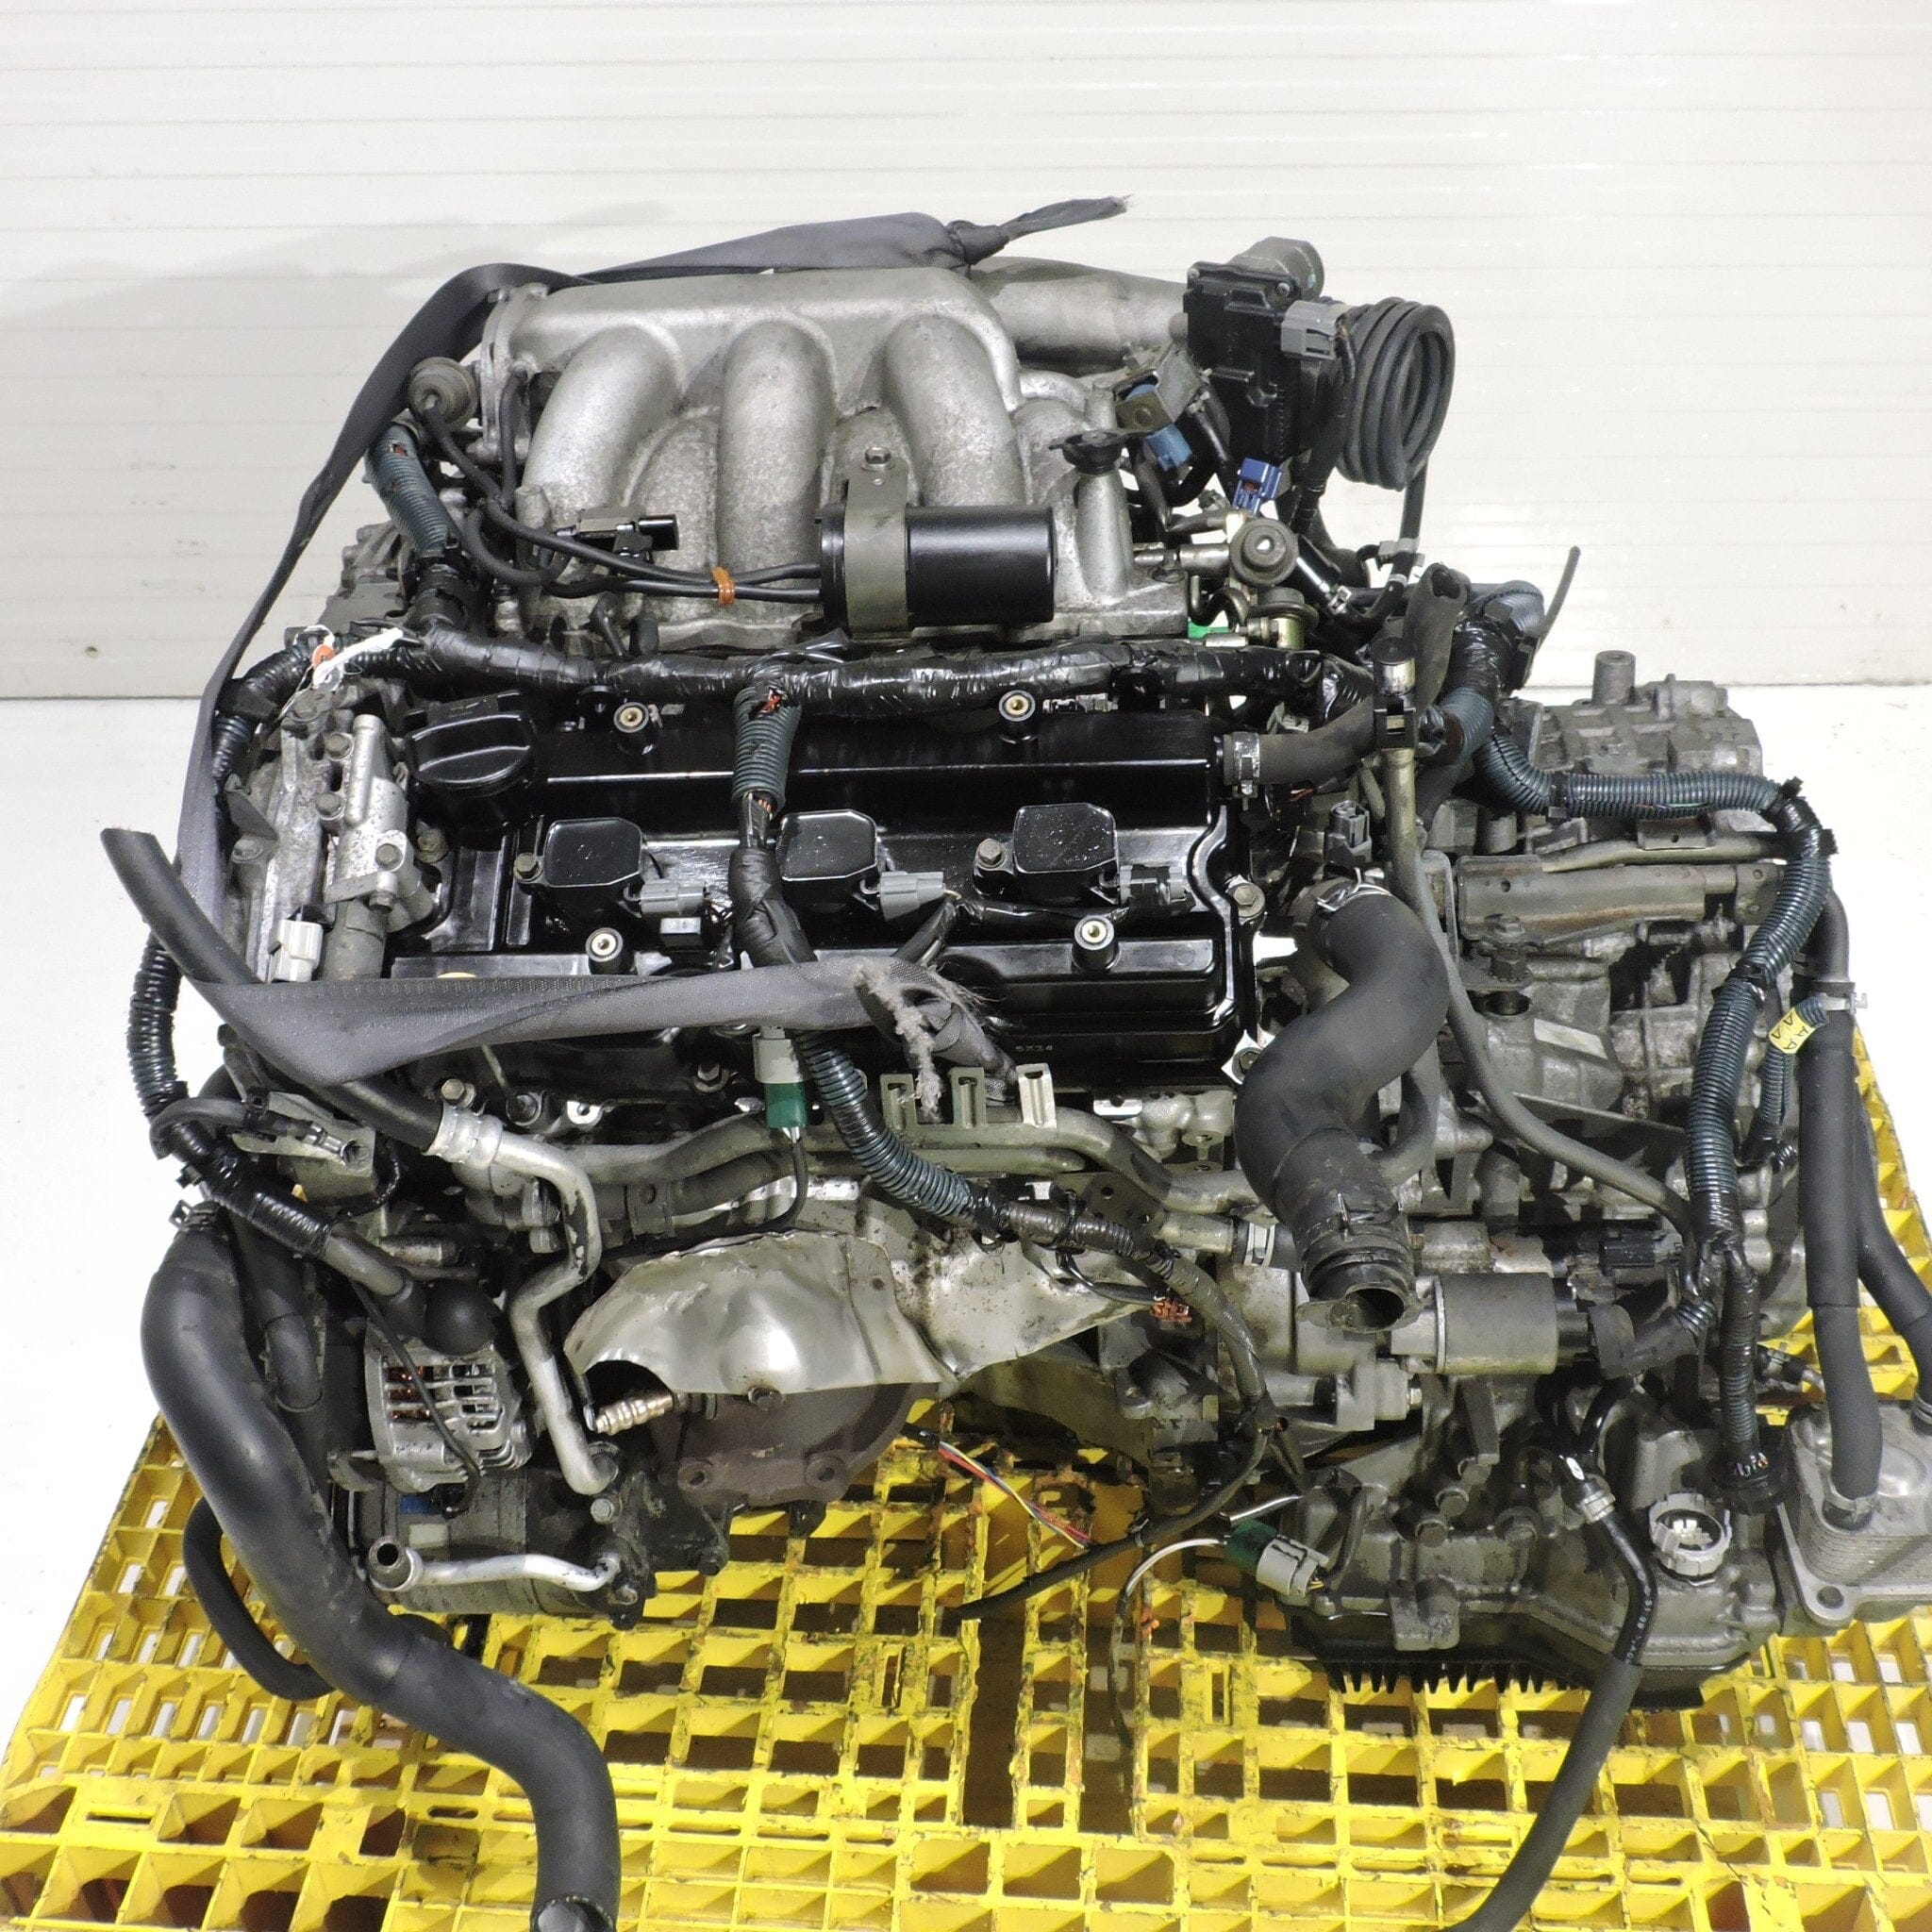 Nissan Murano 2003-2007 3.5L V6 JDM Engine - VQ35DE